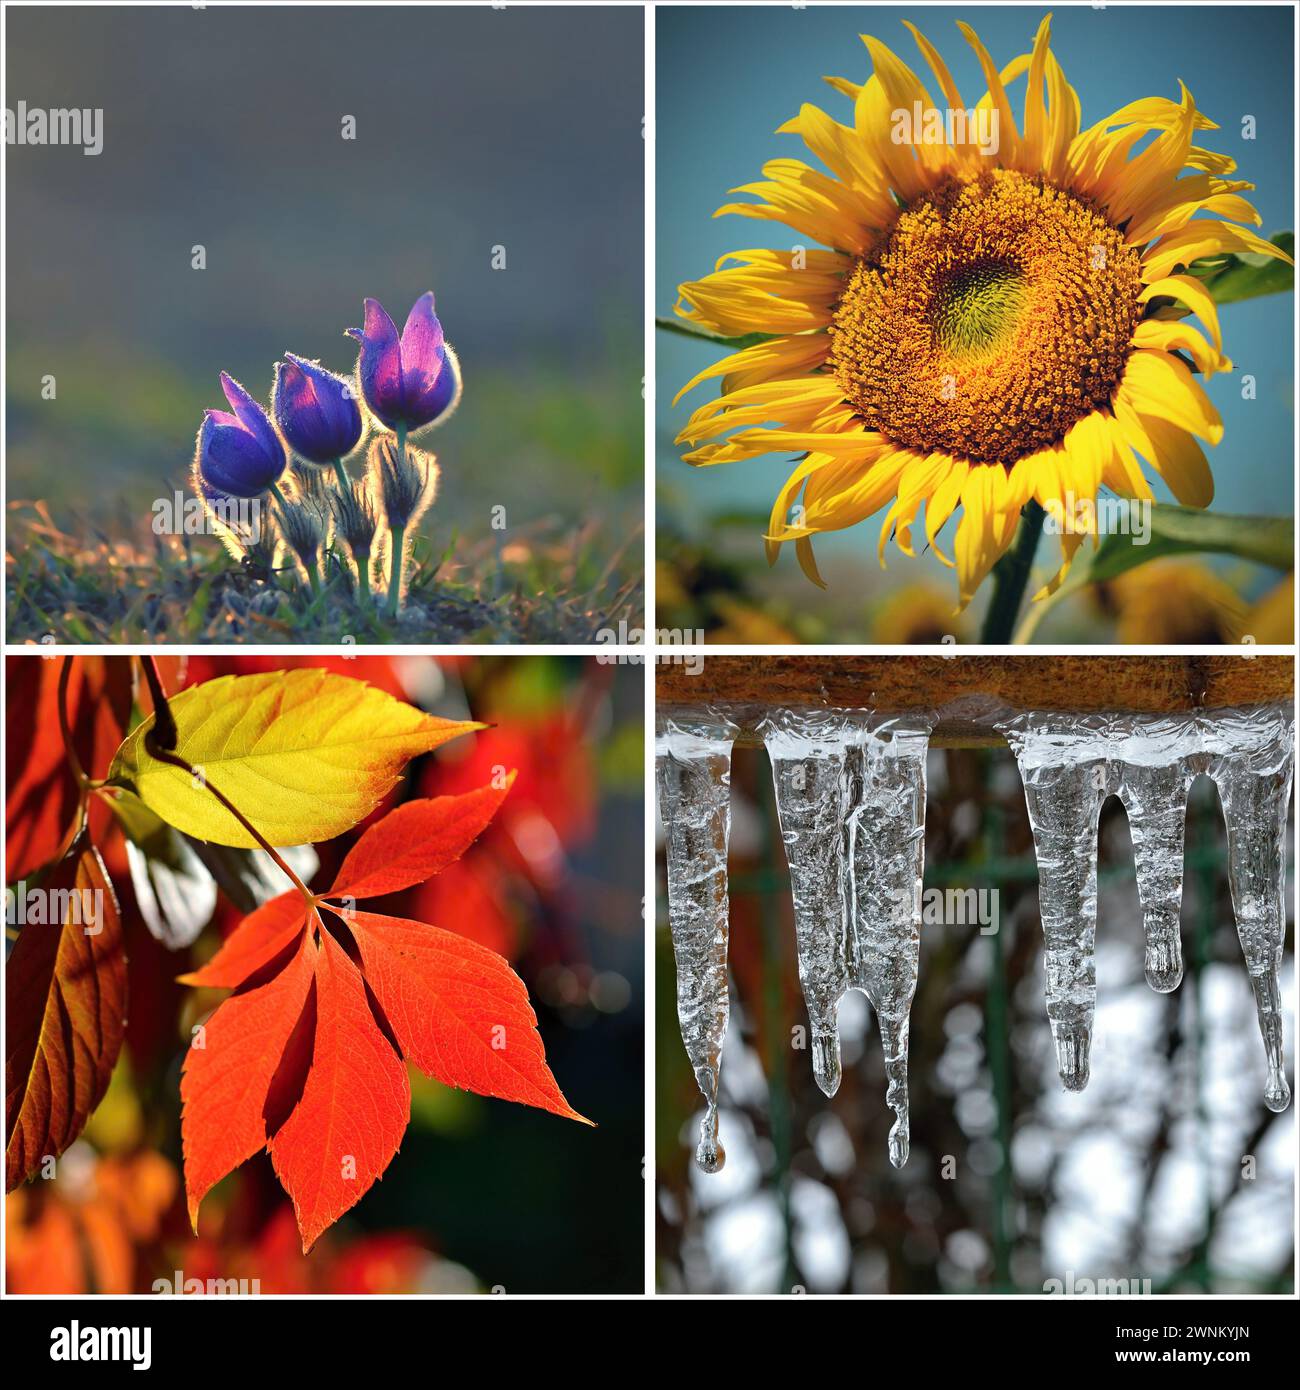 https://c8.alamy.com/comp/2WNKYJN/four-seasons-collage-spring-summer-autumn-winter-2WNKYJN.jpg